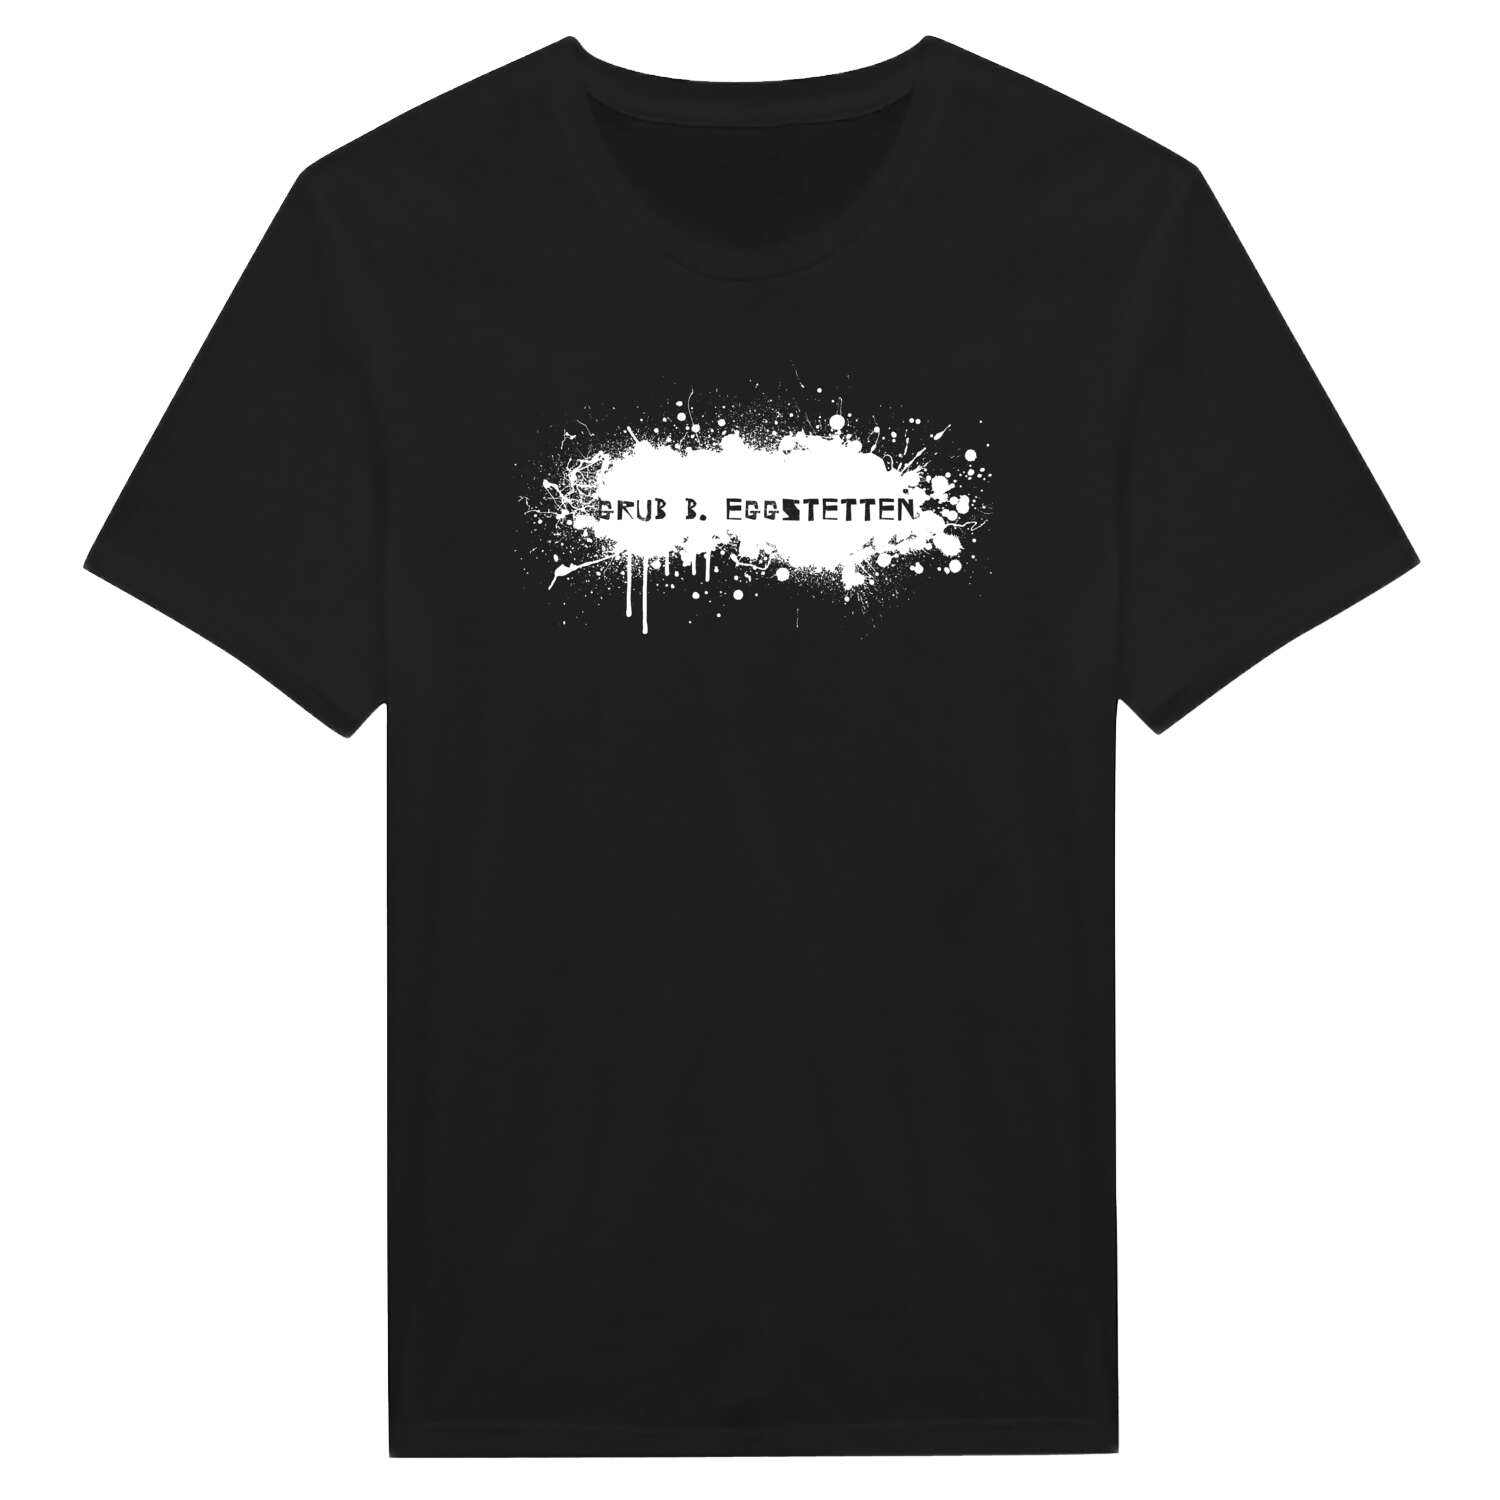 Grub b. Eggstetten T-Shirt »Paint Splash Punk«